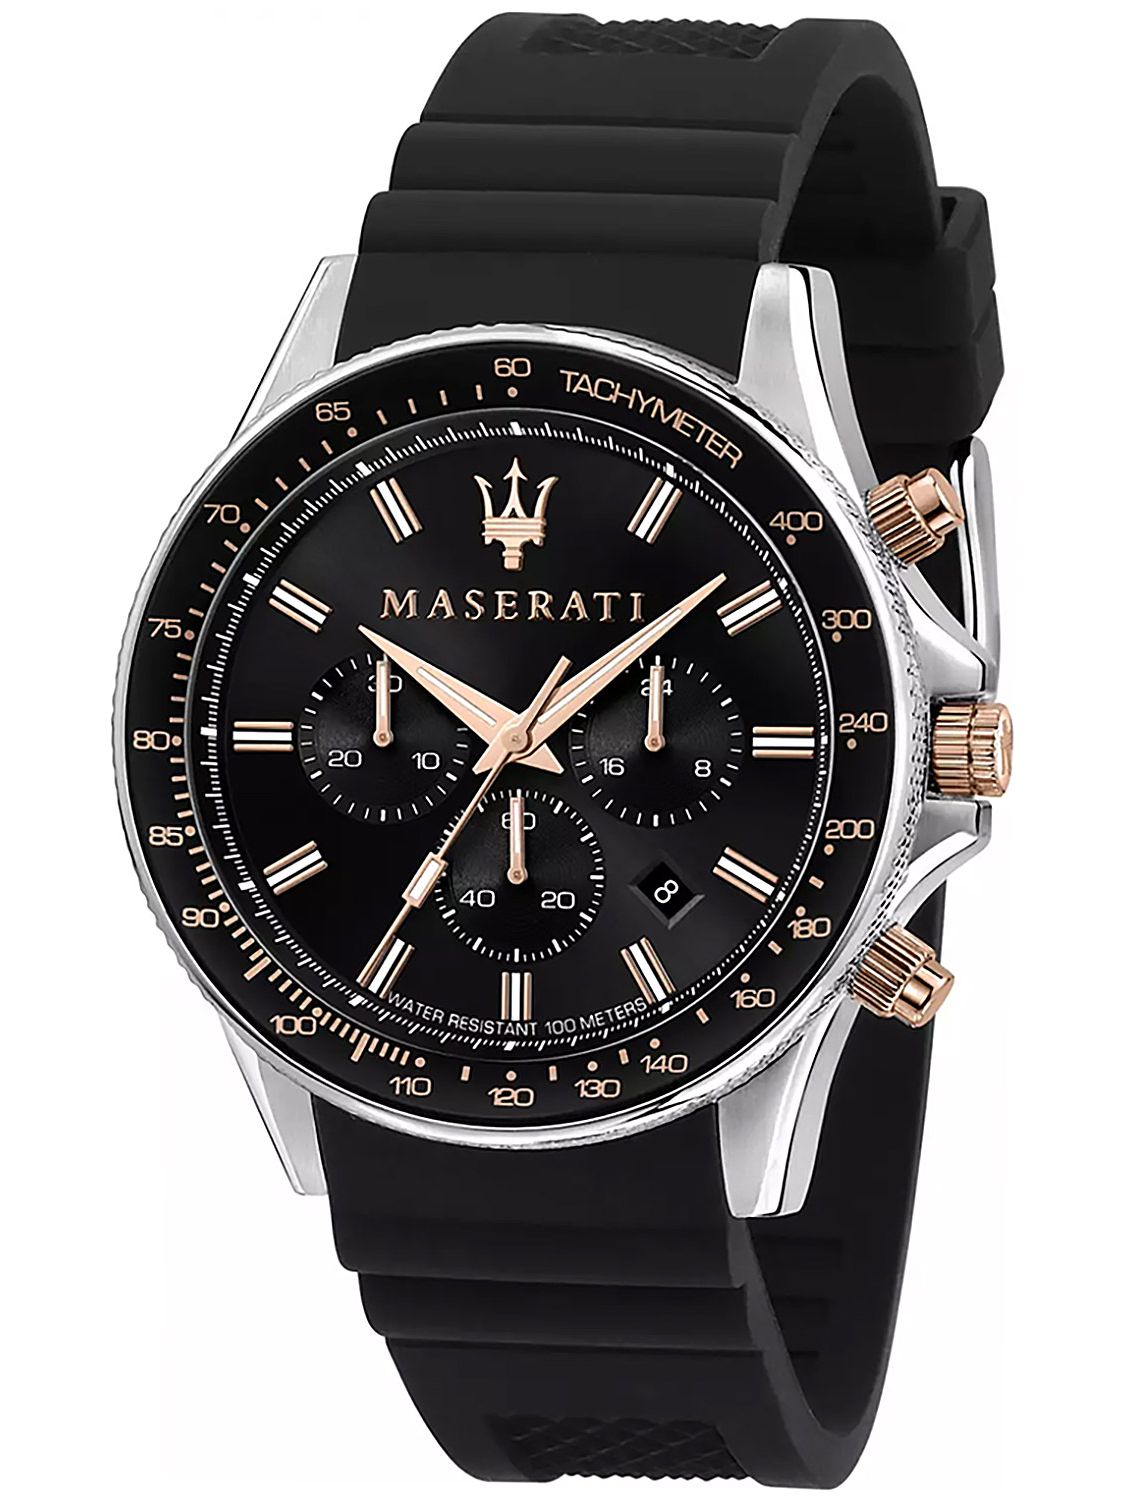 Bicolor Sfida uhrcenter Chronograph Herren-Armbanduhr Maserati R8871640002 •